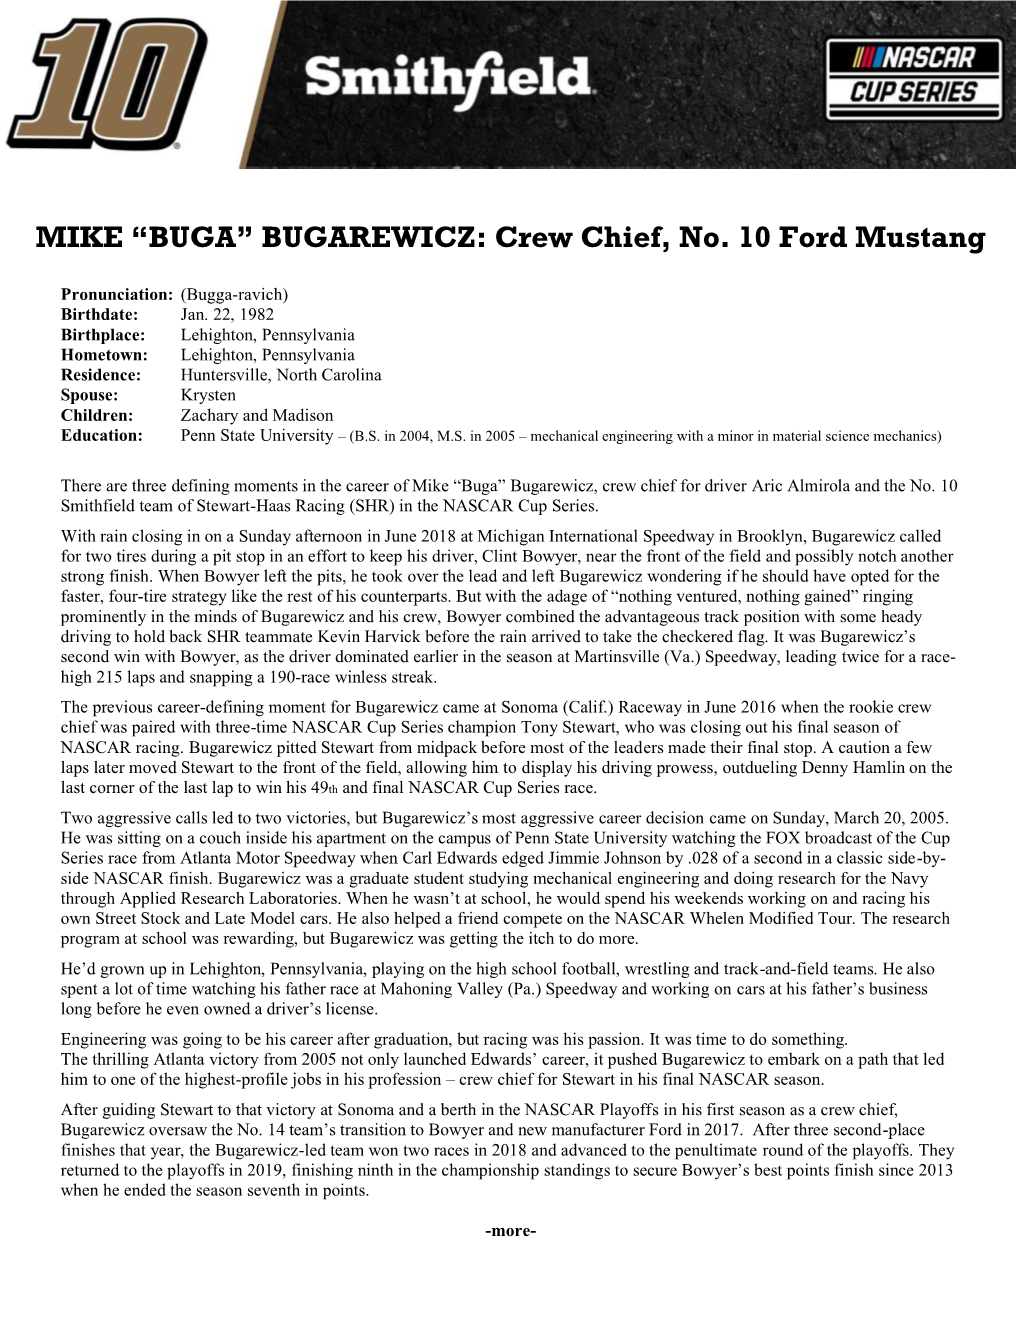 MIKE “BUGA” BUGAREWICZ: Crew Chief, No. 10 Ford Mustang